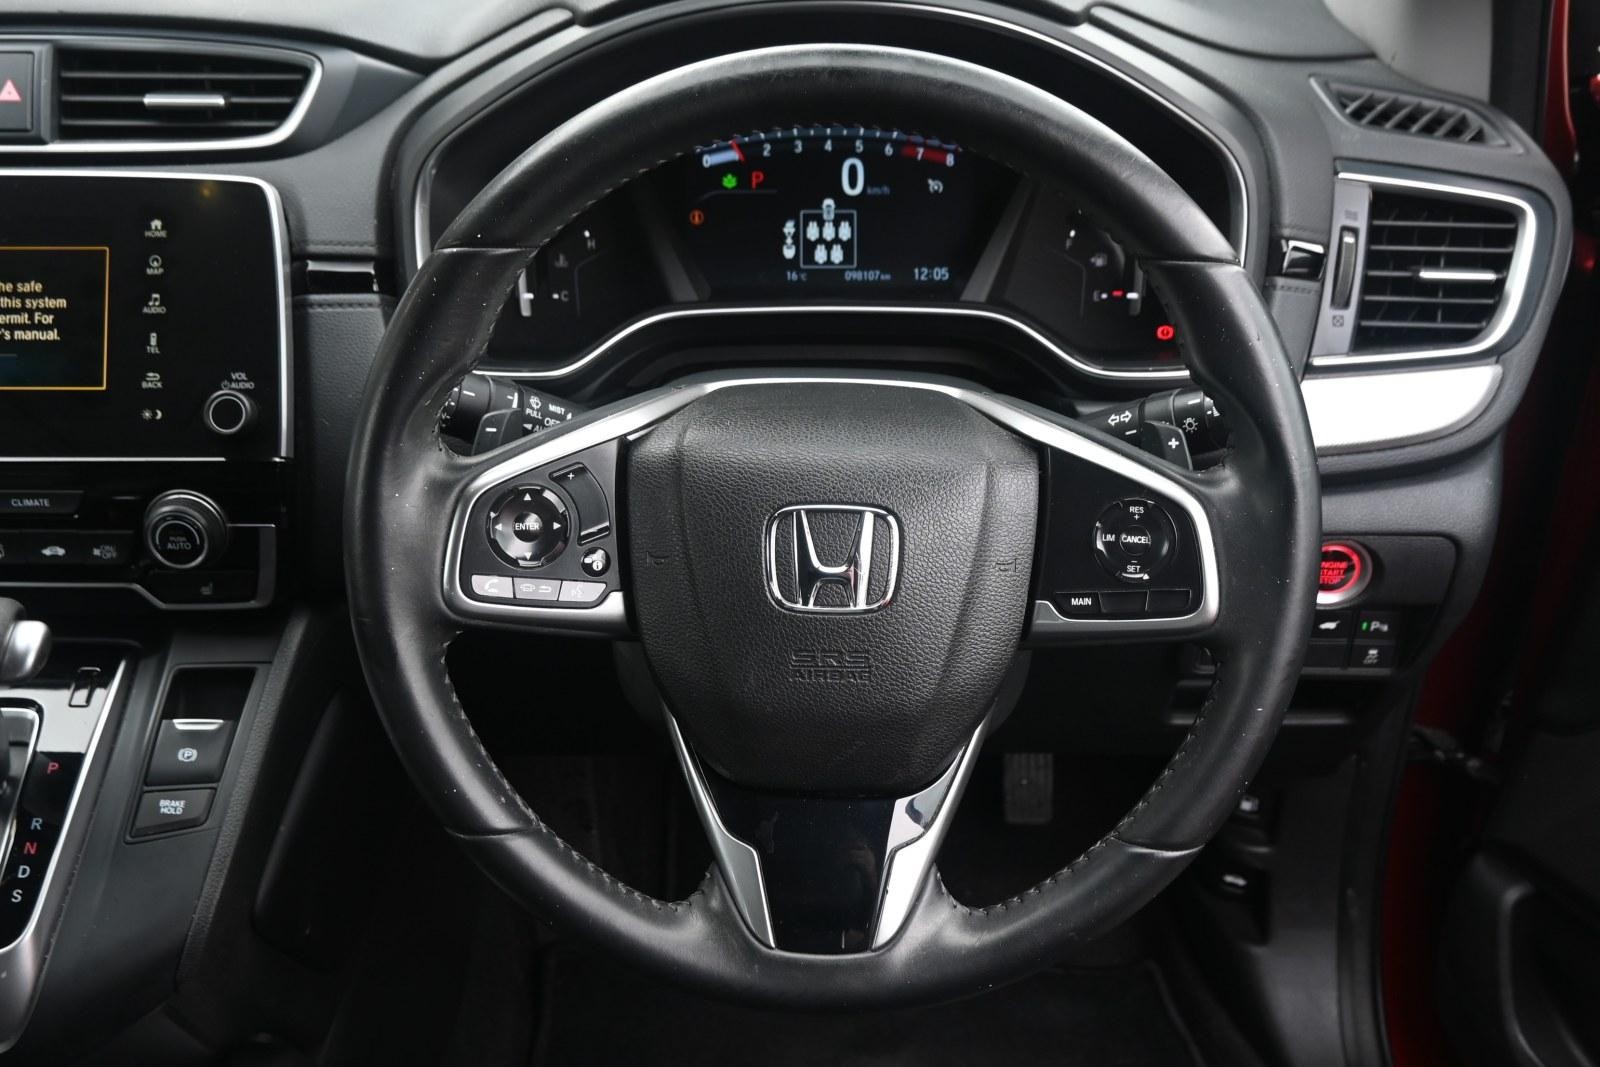 Honda Cr-v image 4